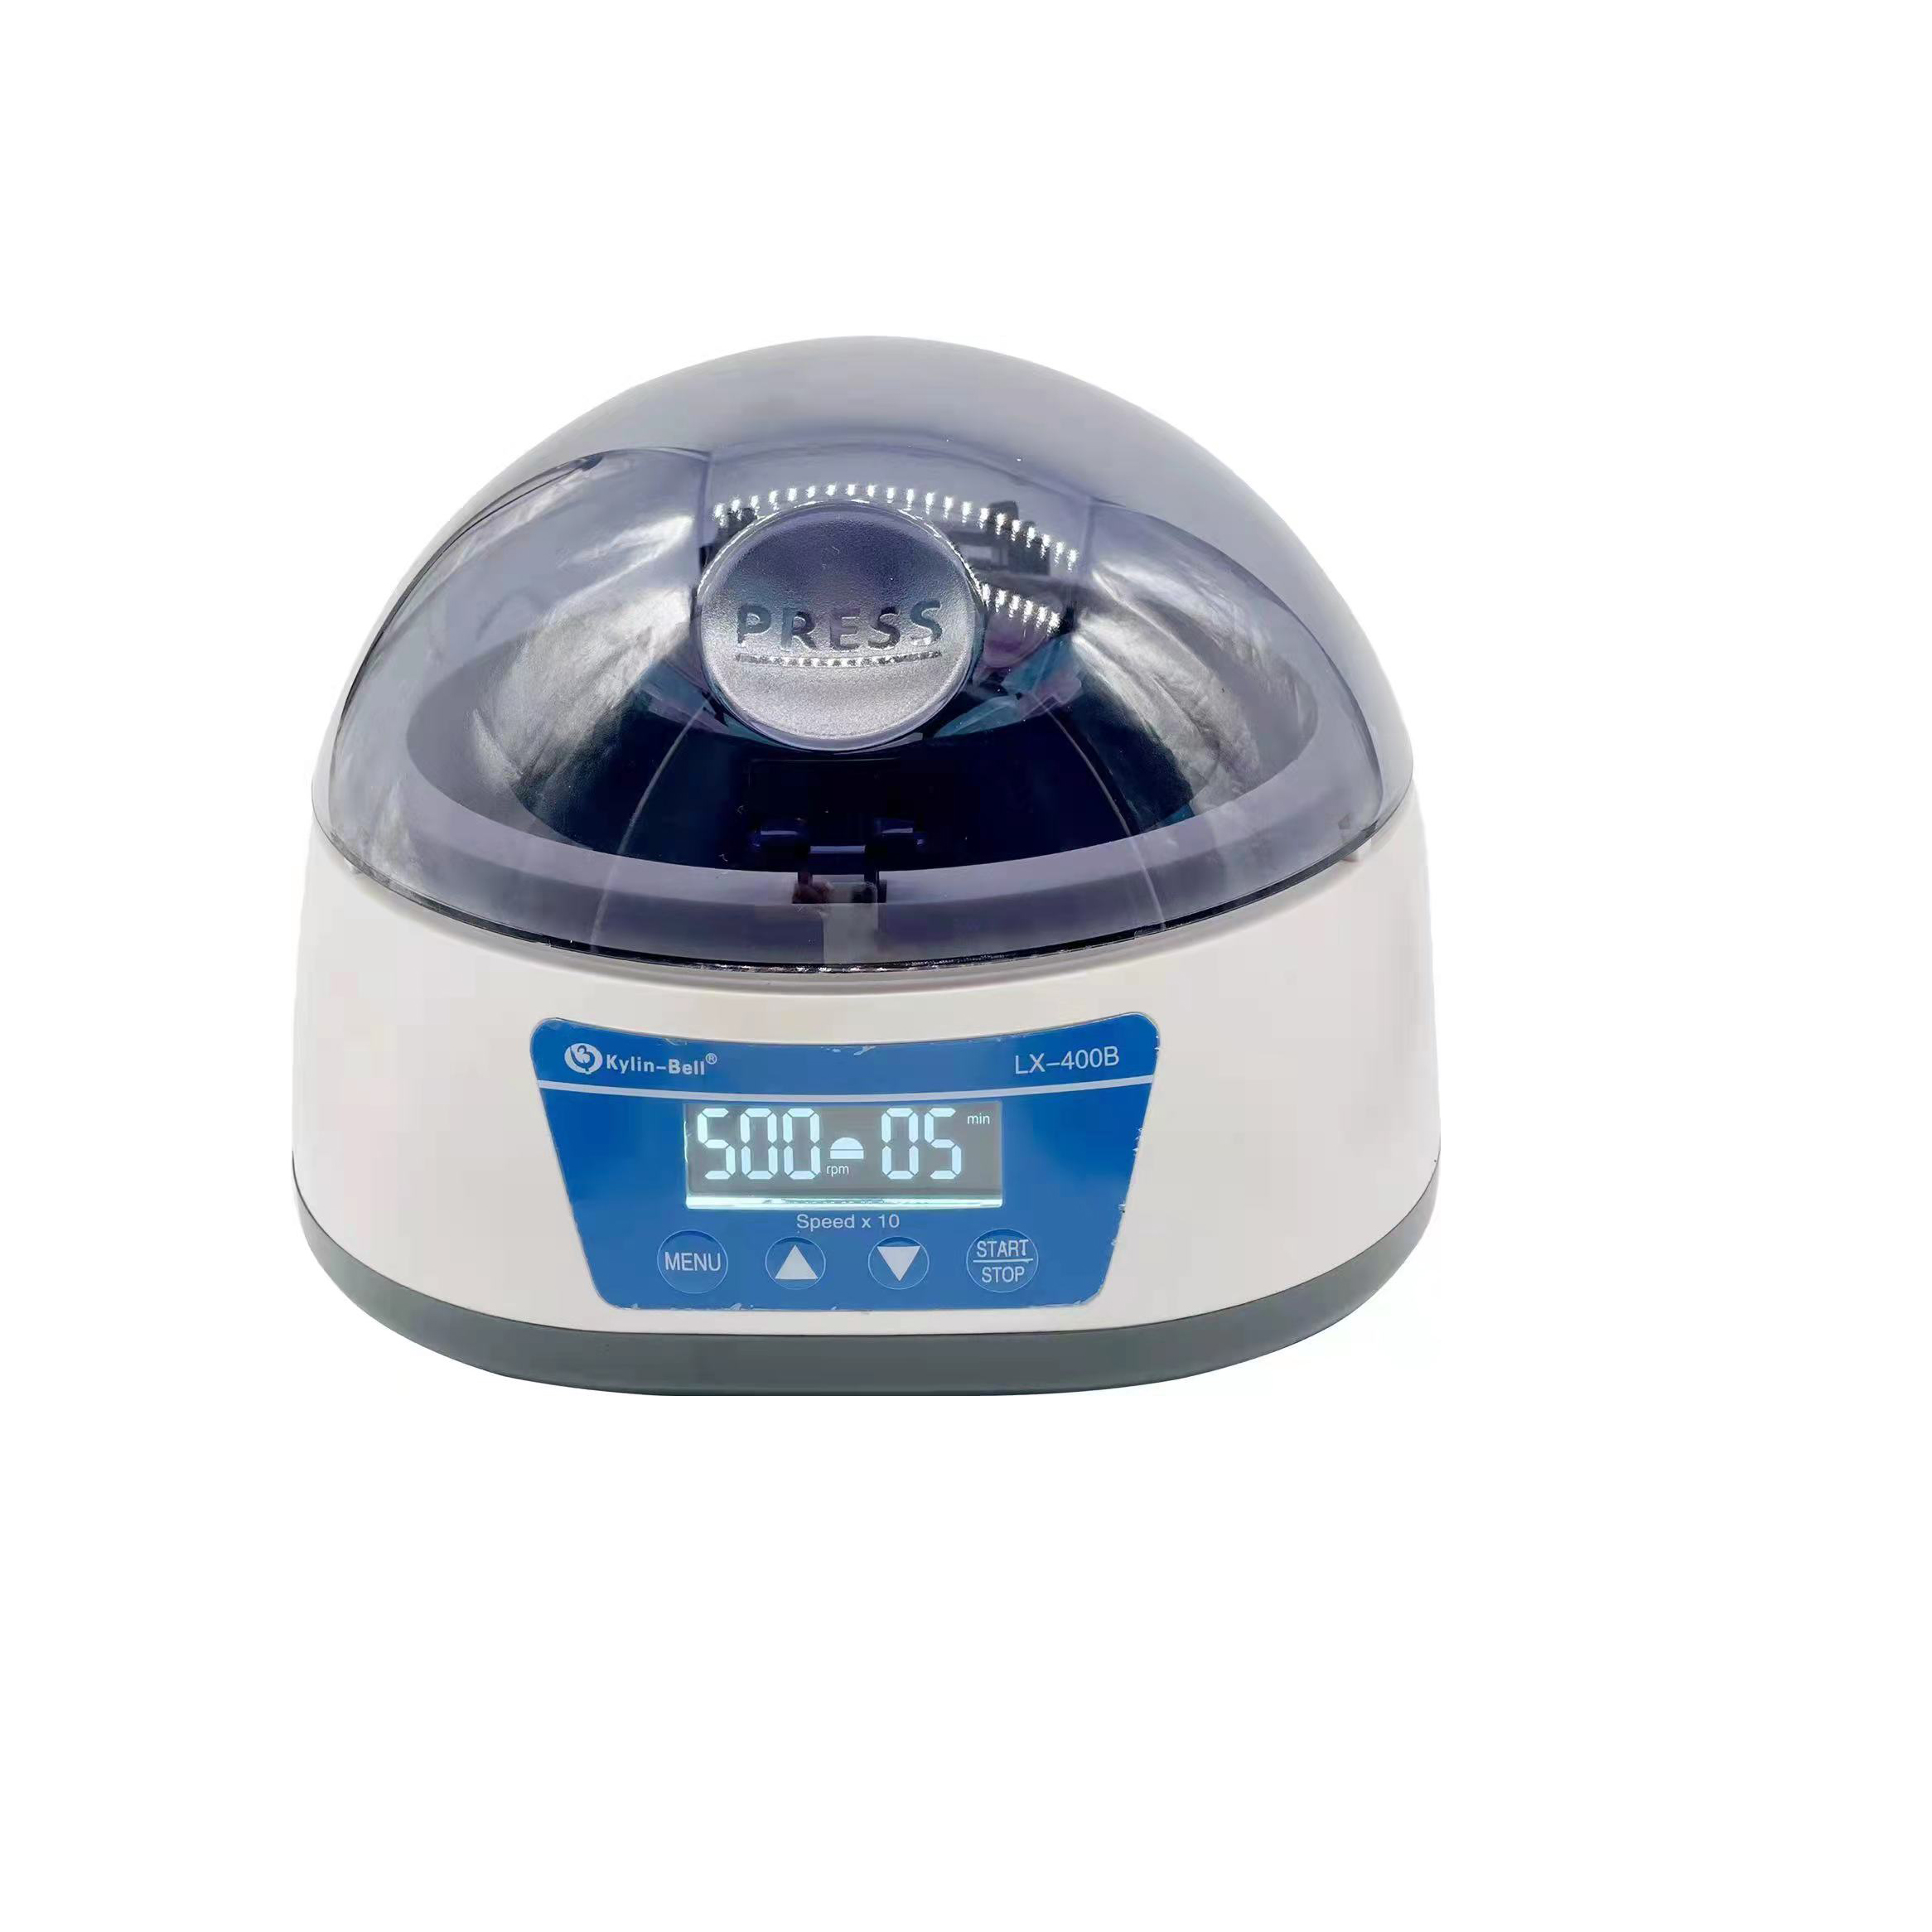 Mini centrifuge LX-400B